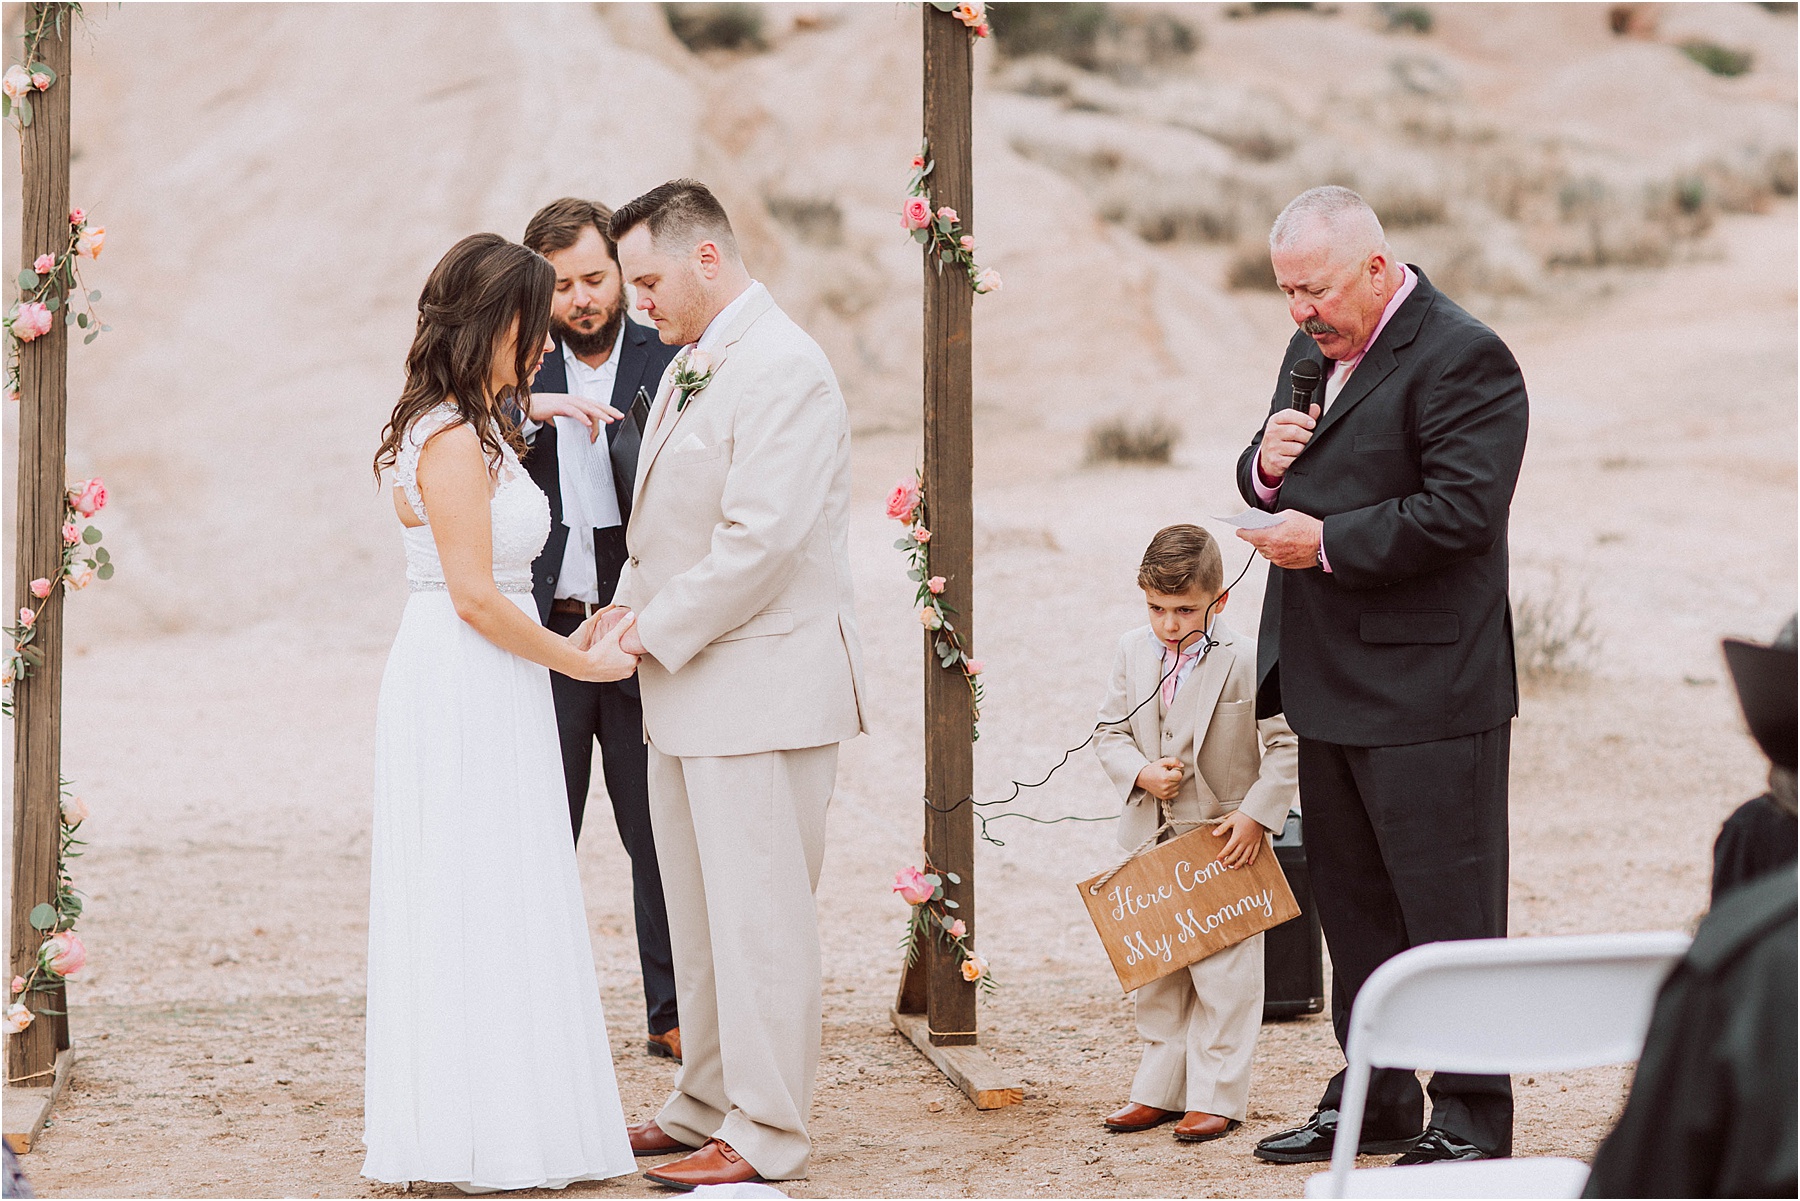 Vasquez Rocks Intimate Wedding & Elopement Photography - Ceremony Coverage